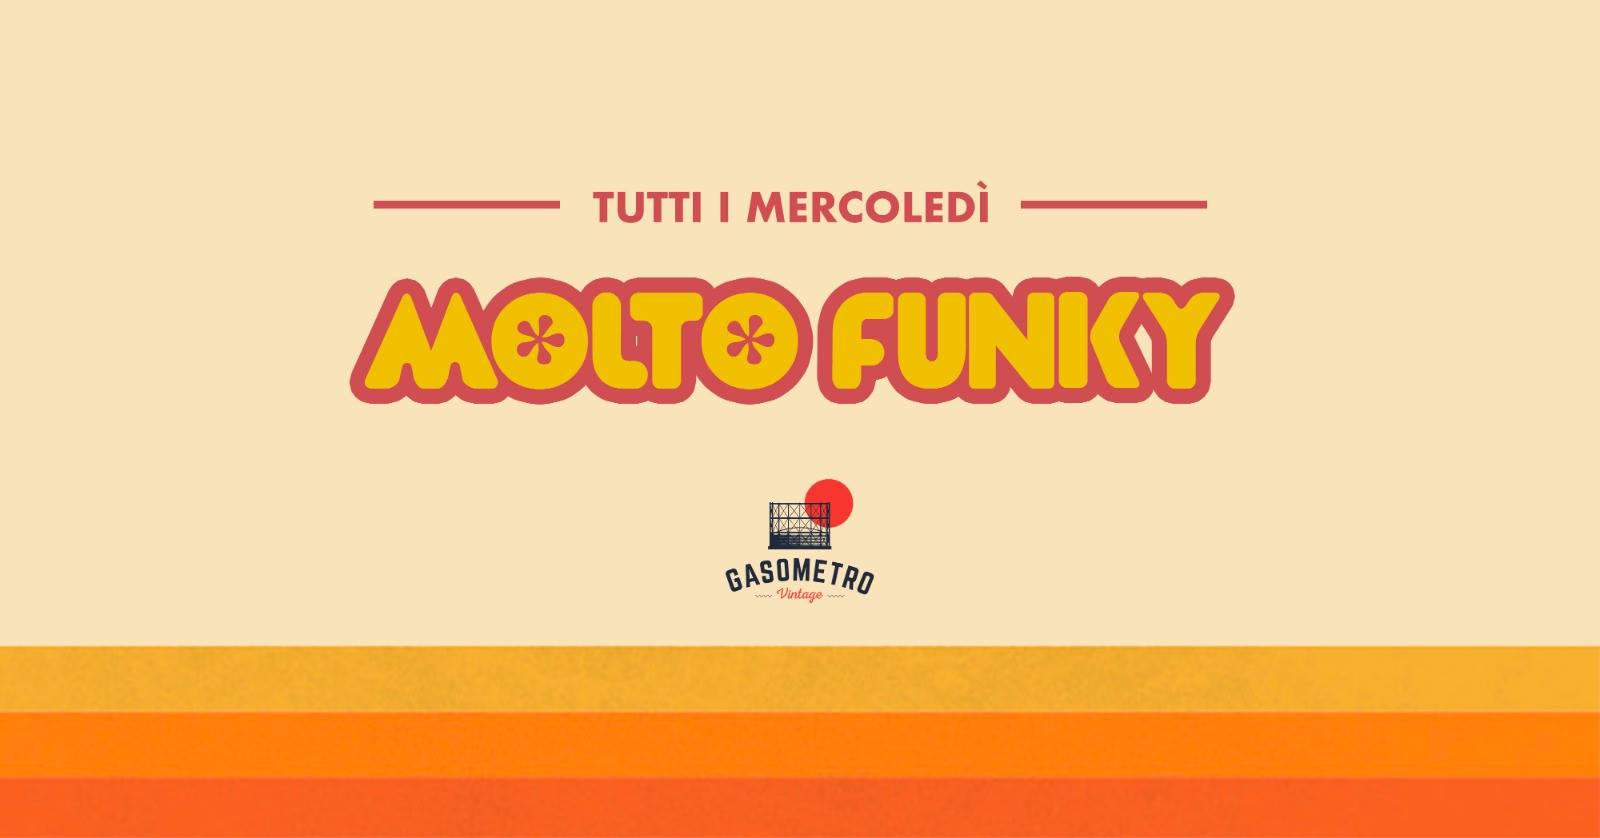 Molto Funky, Gasometro Vintage Roma